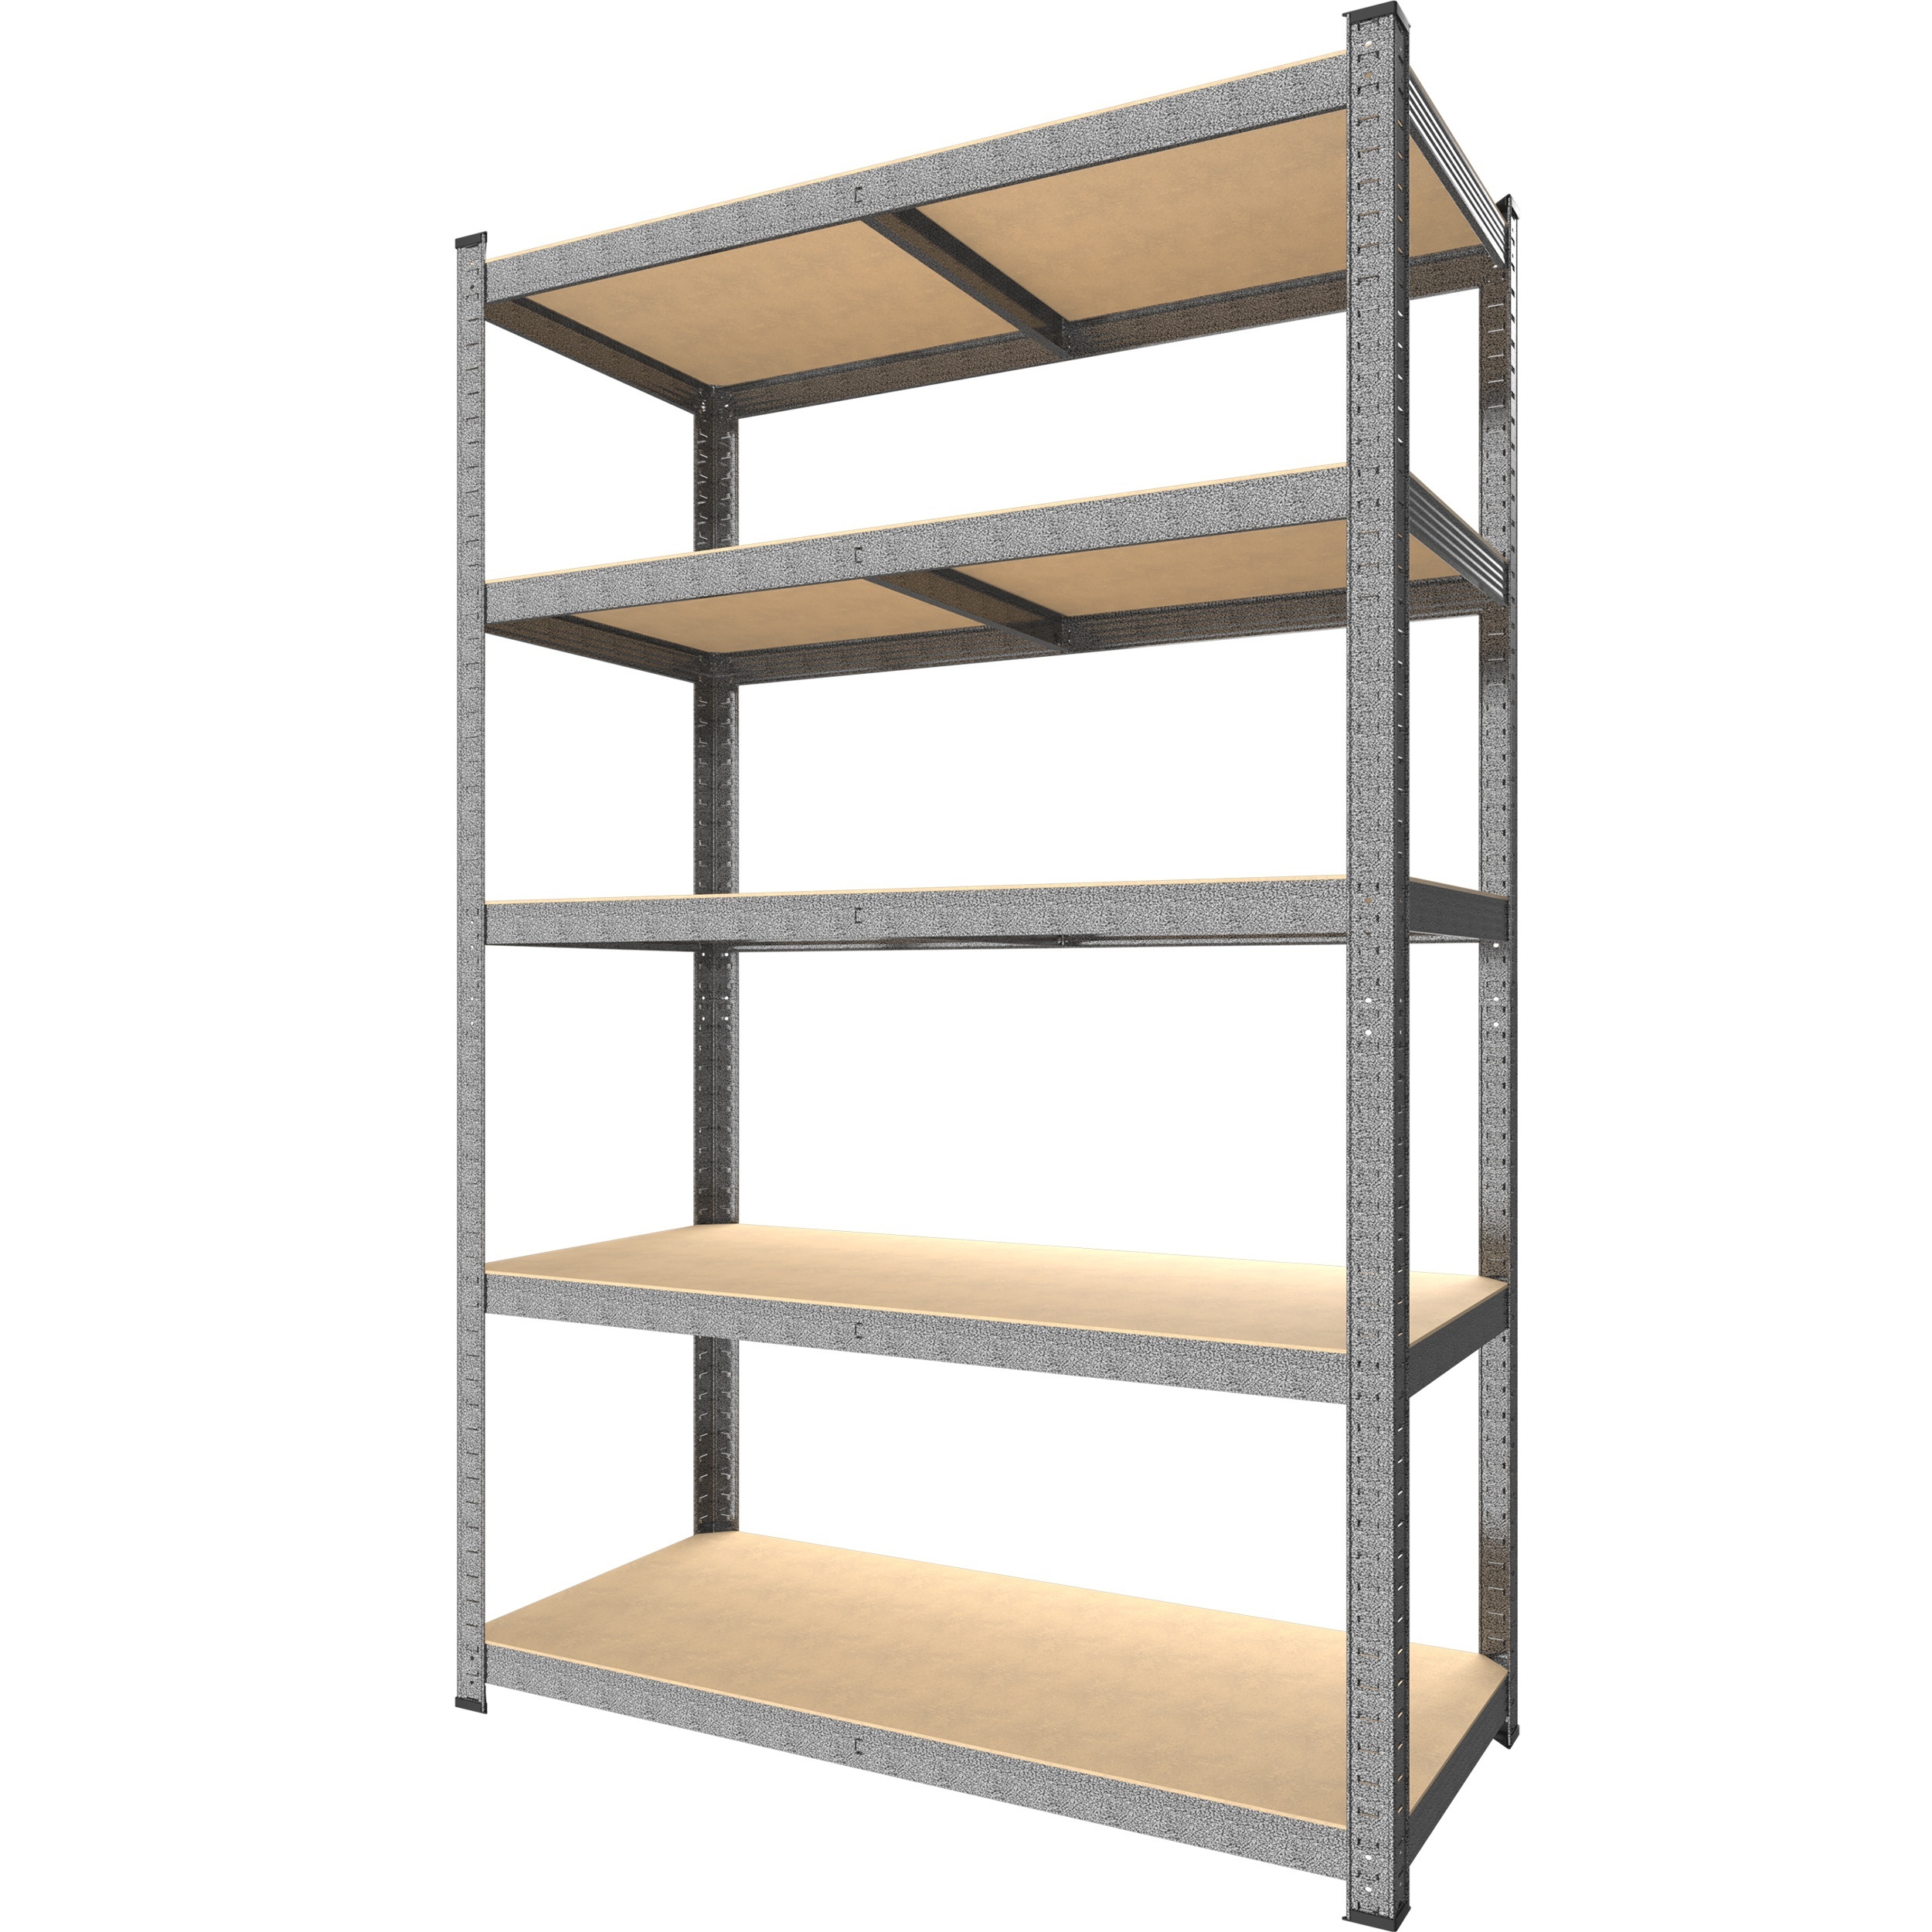 

1pc, 28" W X 12" D X 59" H Garage Storage Shelves, 5 Tier Adjustable Storage Shelving Unit, Utility Standing Shelf Rack Organizer For Warehouse Kitchen Pantry Closet Basement, Silver Grey